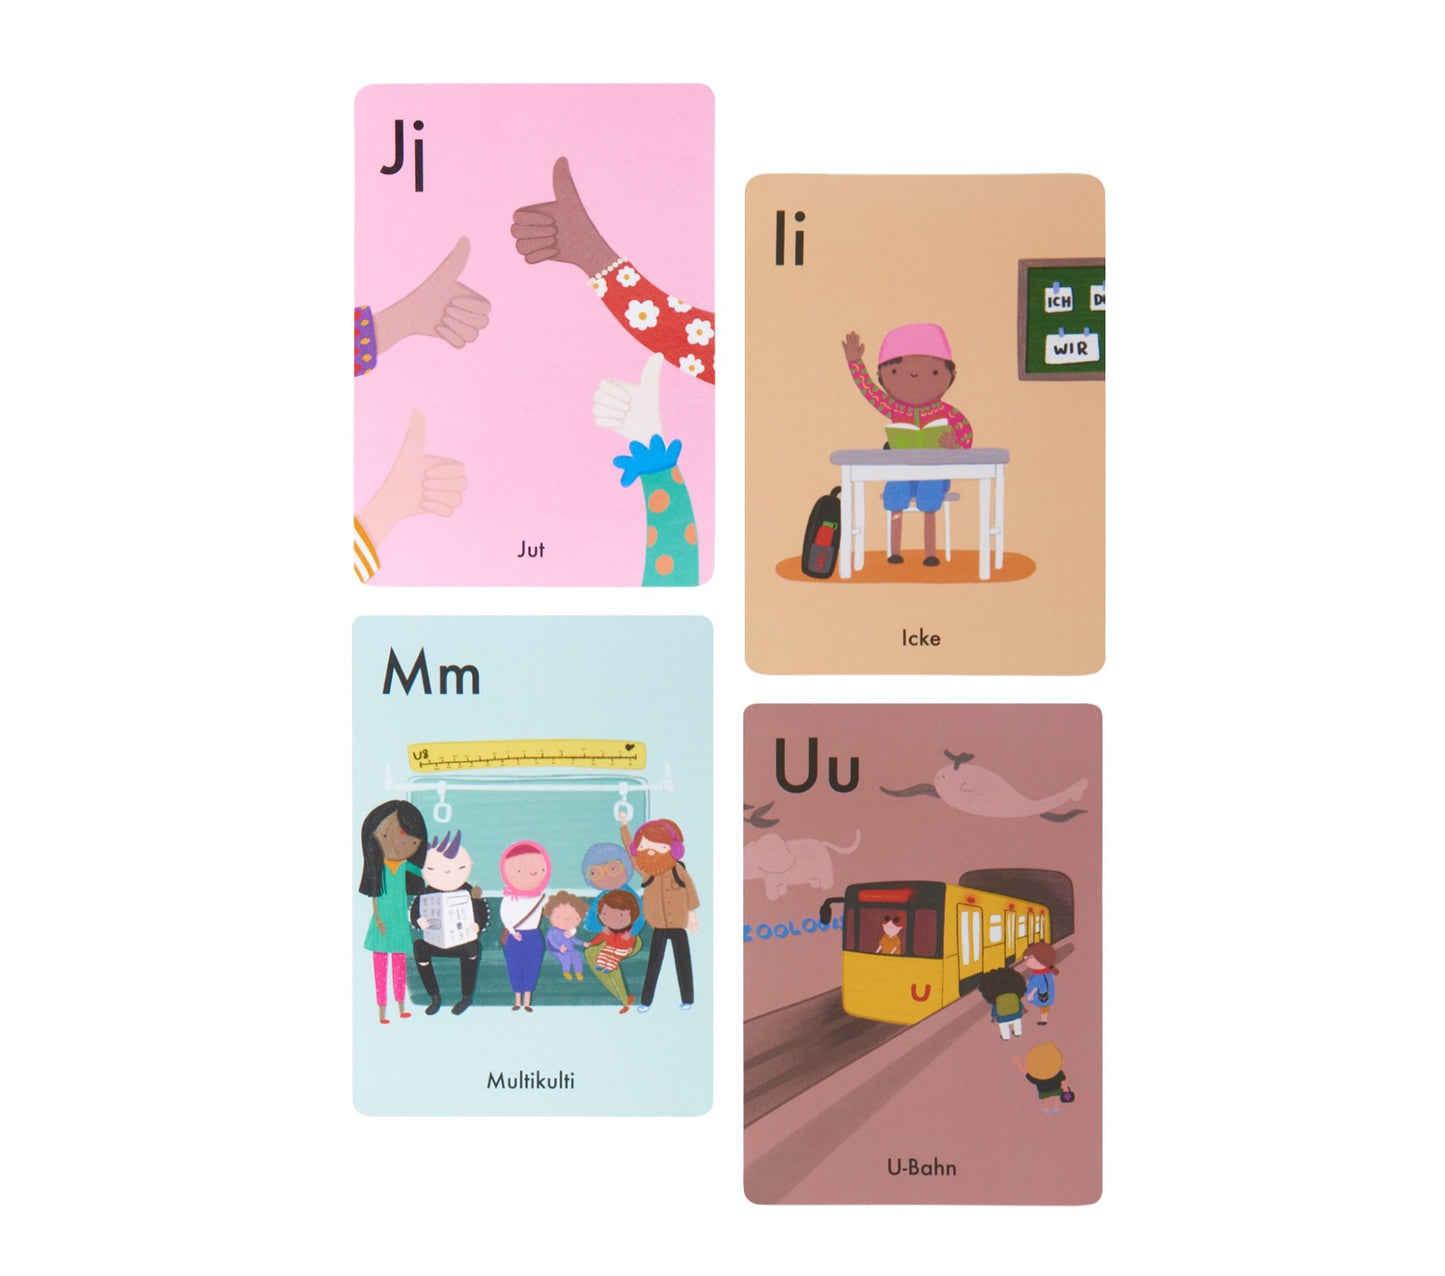 ABC-Lernkarten-Flashcards